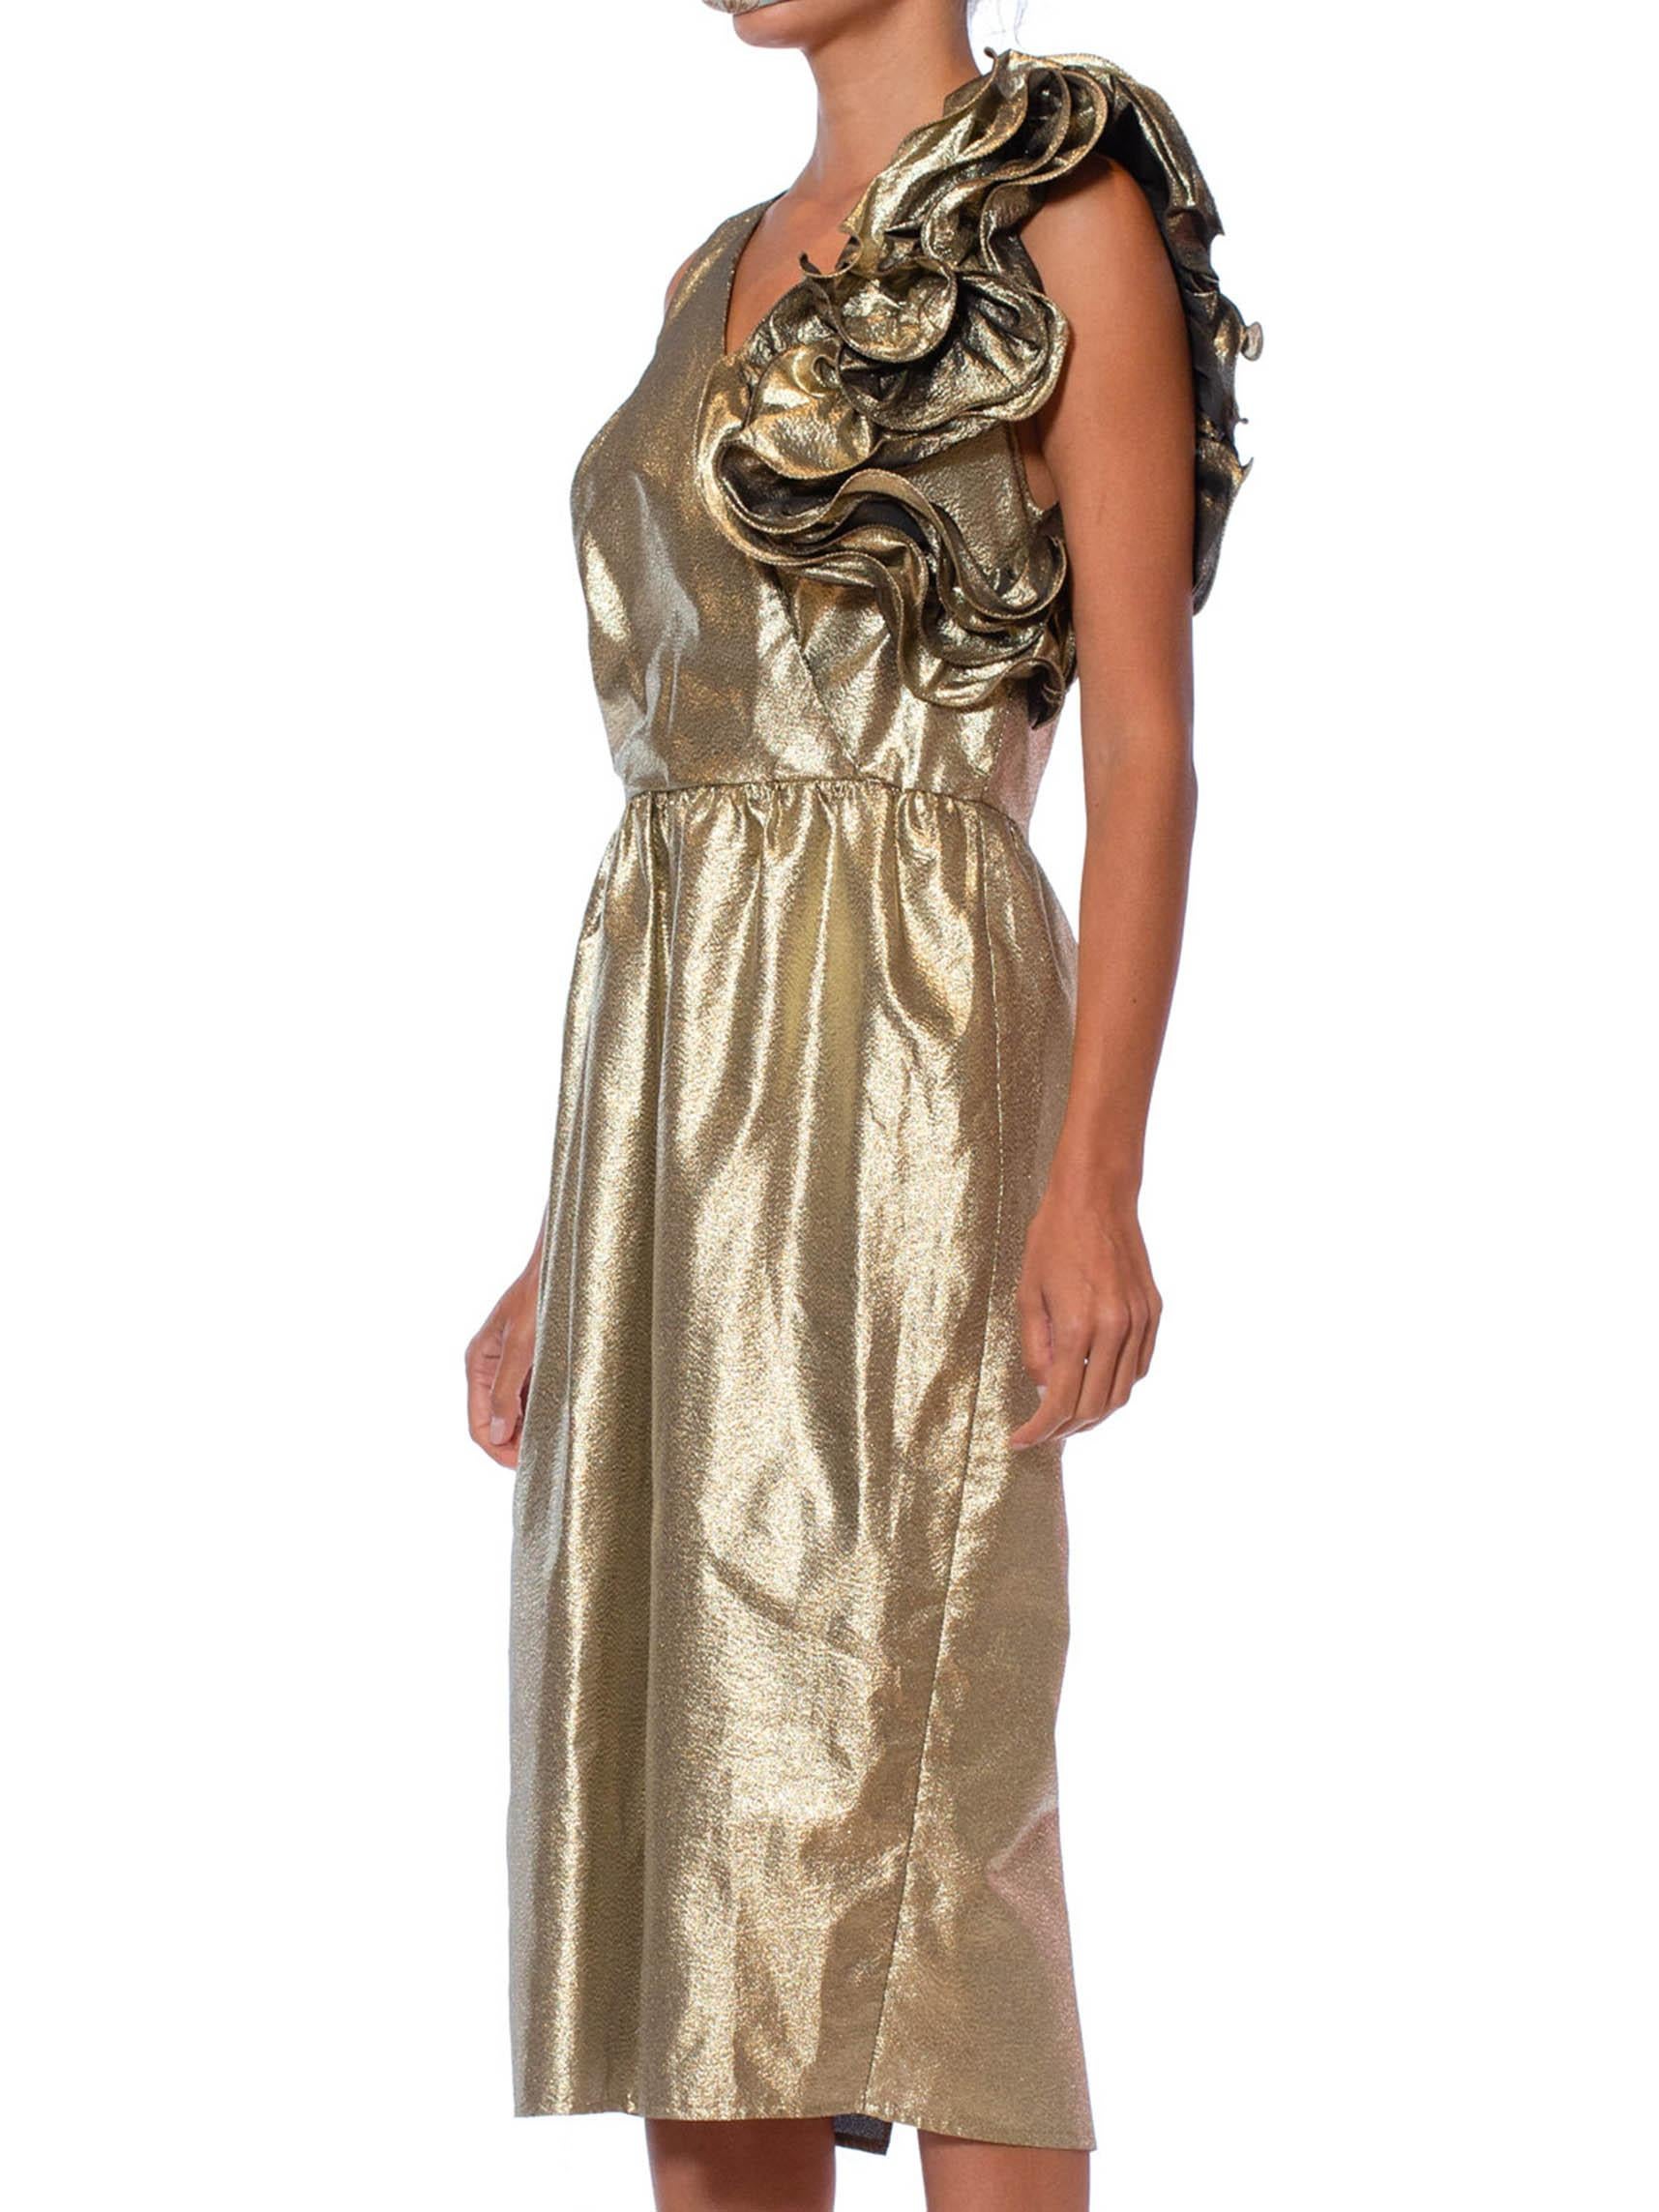 Women's 1980S Metallic Poly/Lurex Gold Lamé Dramatic Ruffled Cocktail Dress